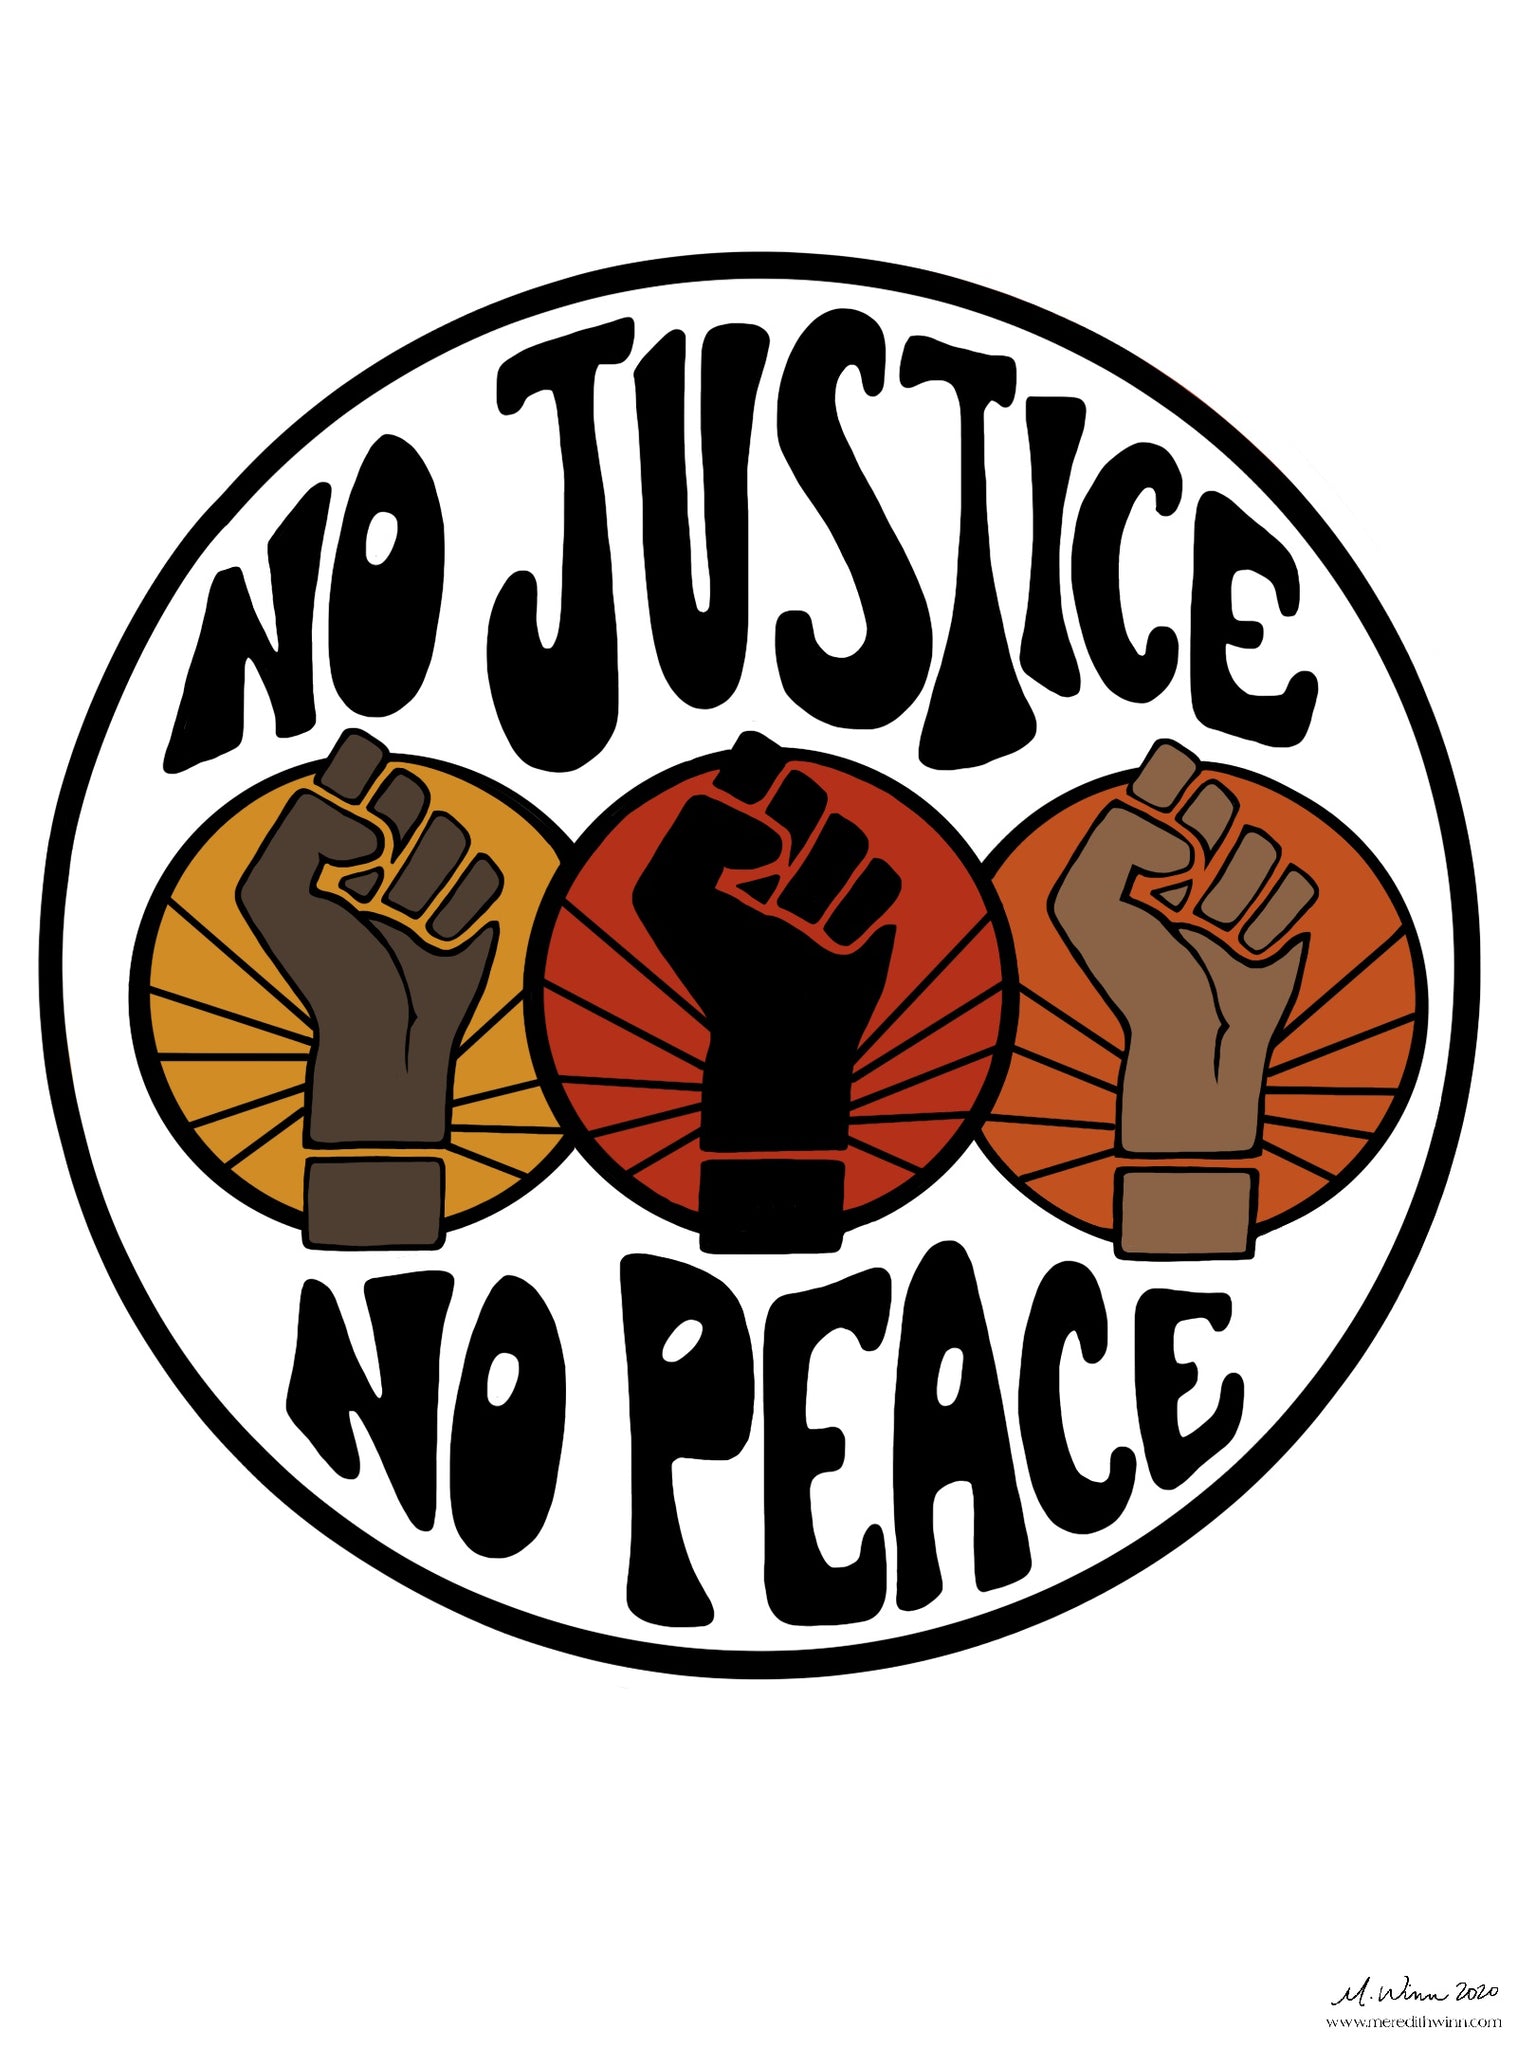 No Justice No Peace - FREE downloadable art